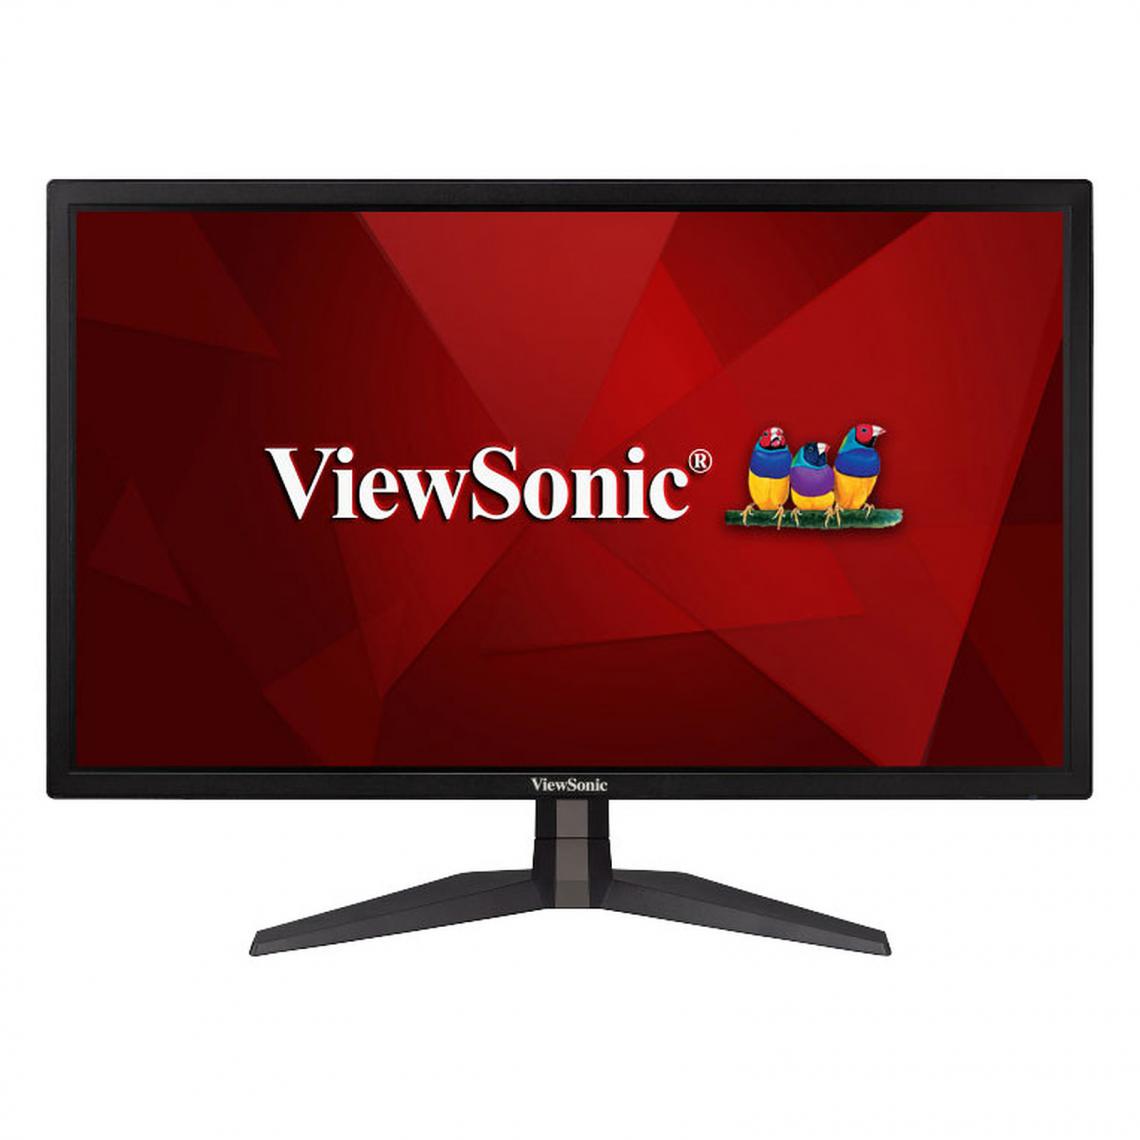 Viewsonic - Ecran PC Gamer - VIEWSONIC VX2458 - P - MHD - 24 FHD - Dalle TN - 1 ms - 144Hz - 3 x HDMI / DisplayPort - AMD FreeSync - Moniteur PC